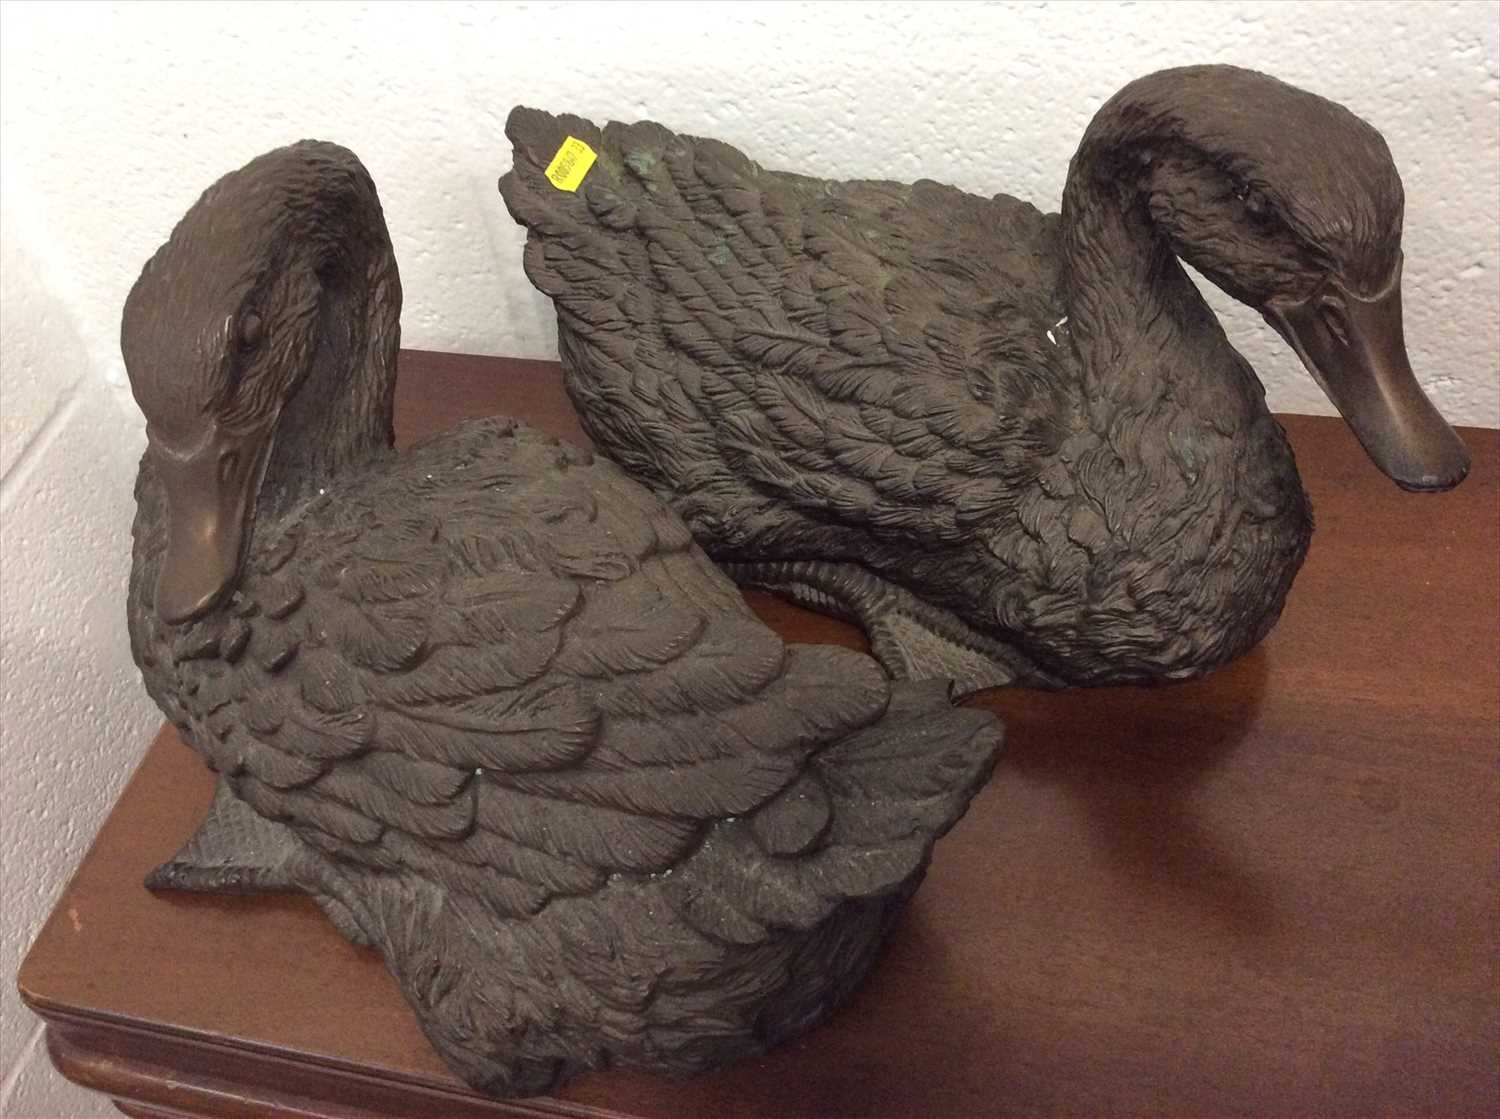 Lot 16 - Pair of bronzed resin figures of ducks